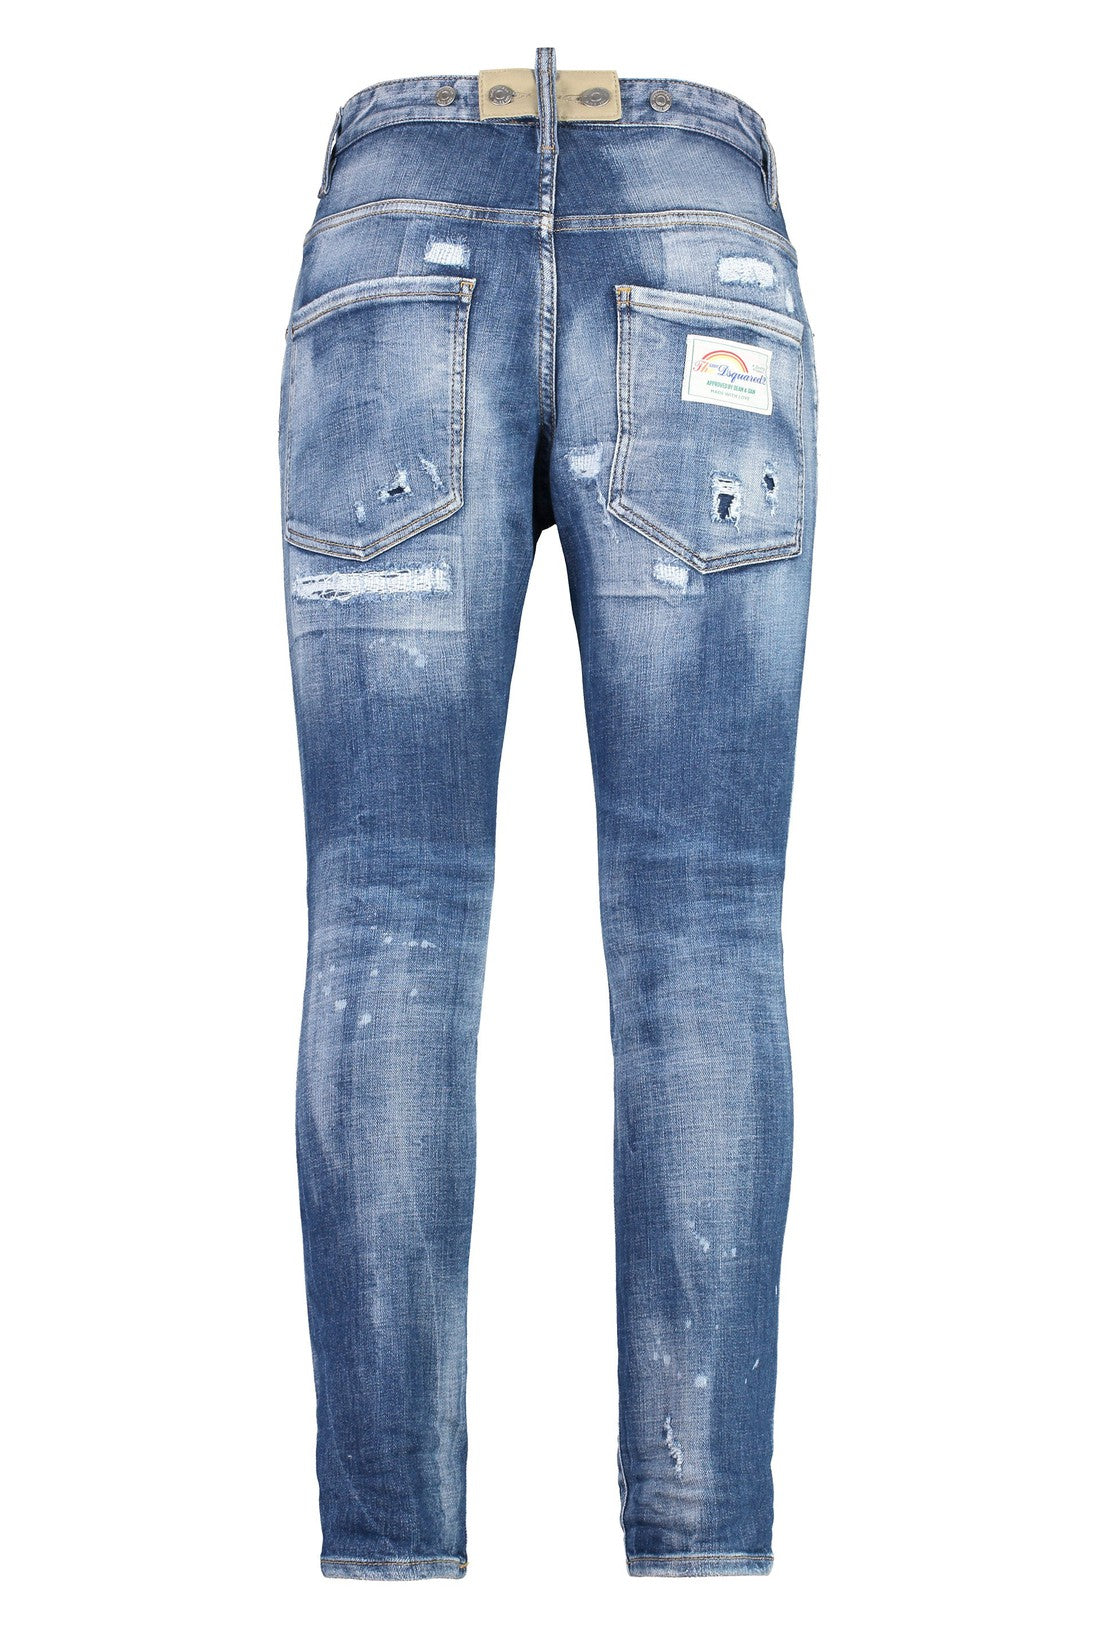 Dsquared2-OUTLET-SALE-Destroyed slim fit jeans-ARCHIVIST